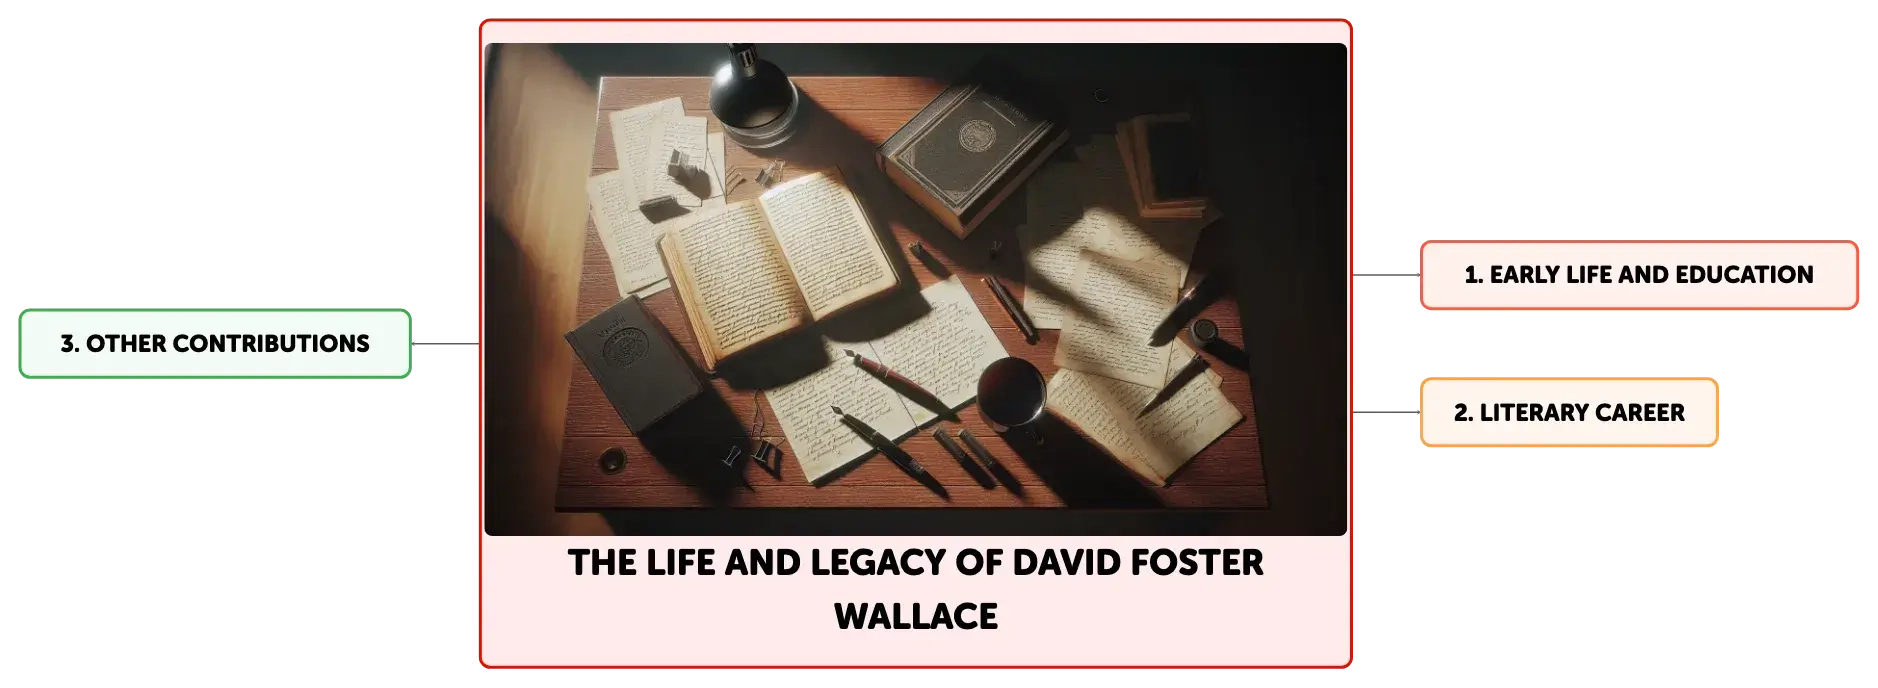 david foster wallace senior thesis